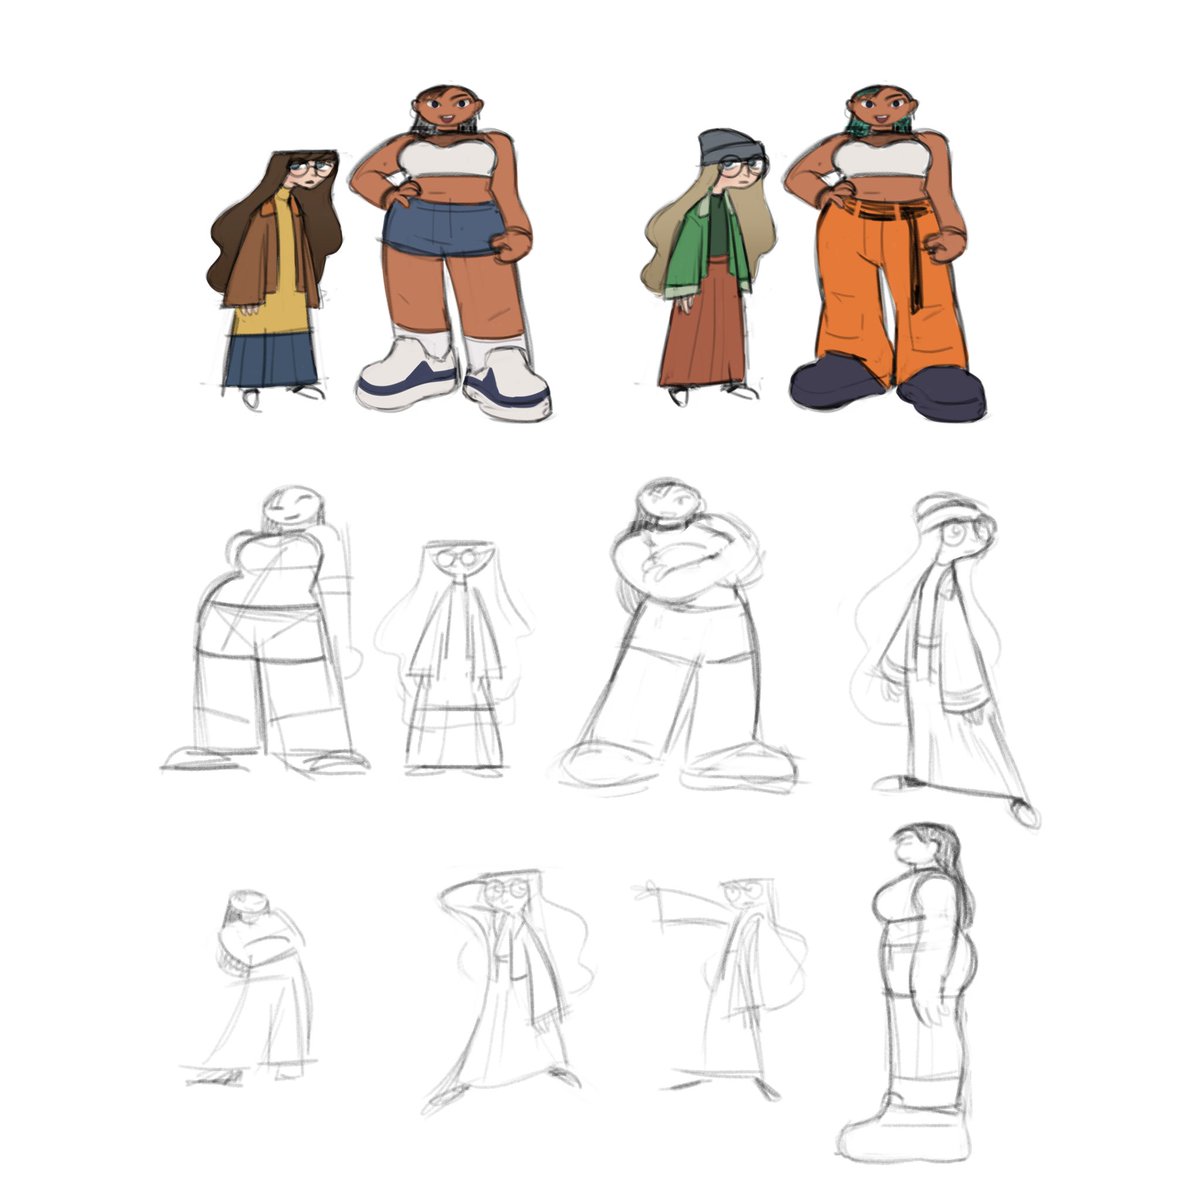 Some more development sketches 